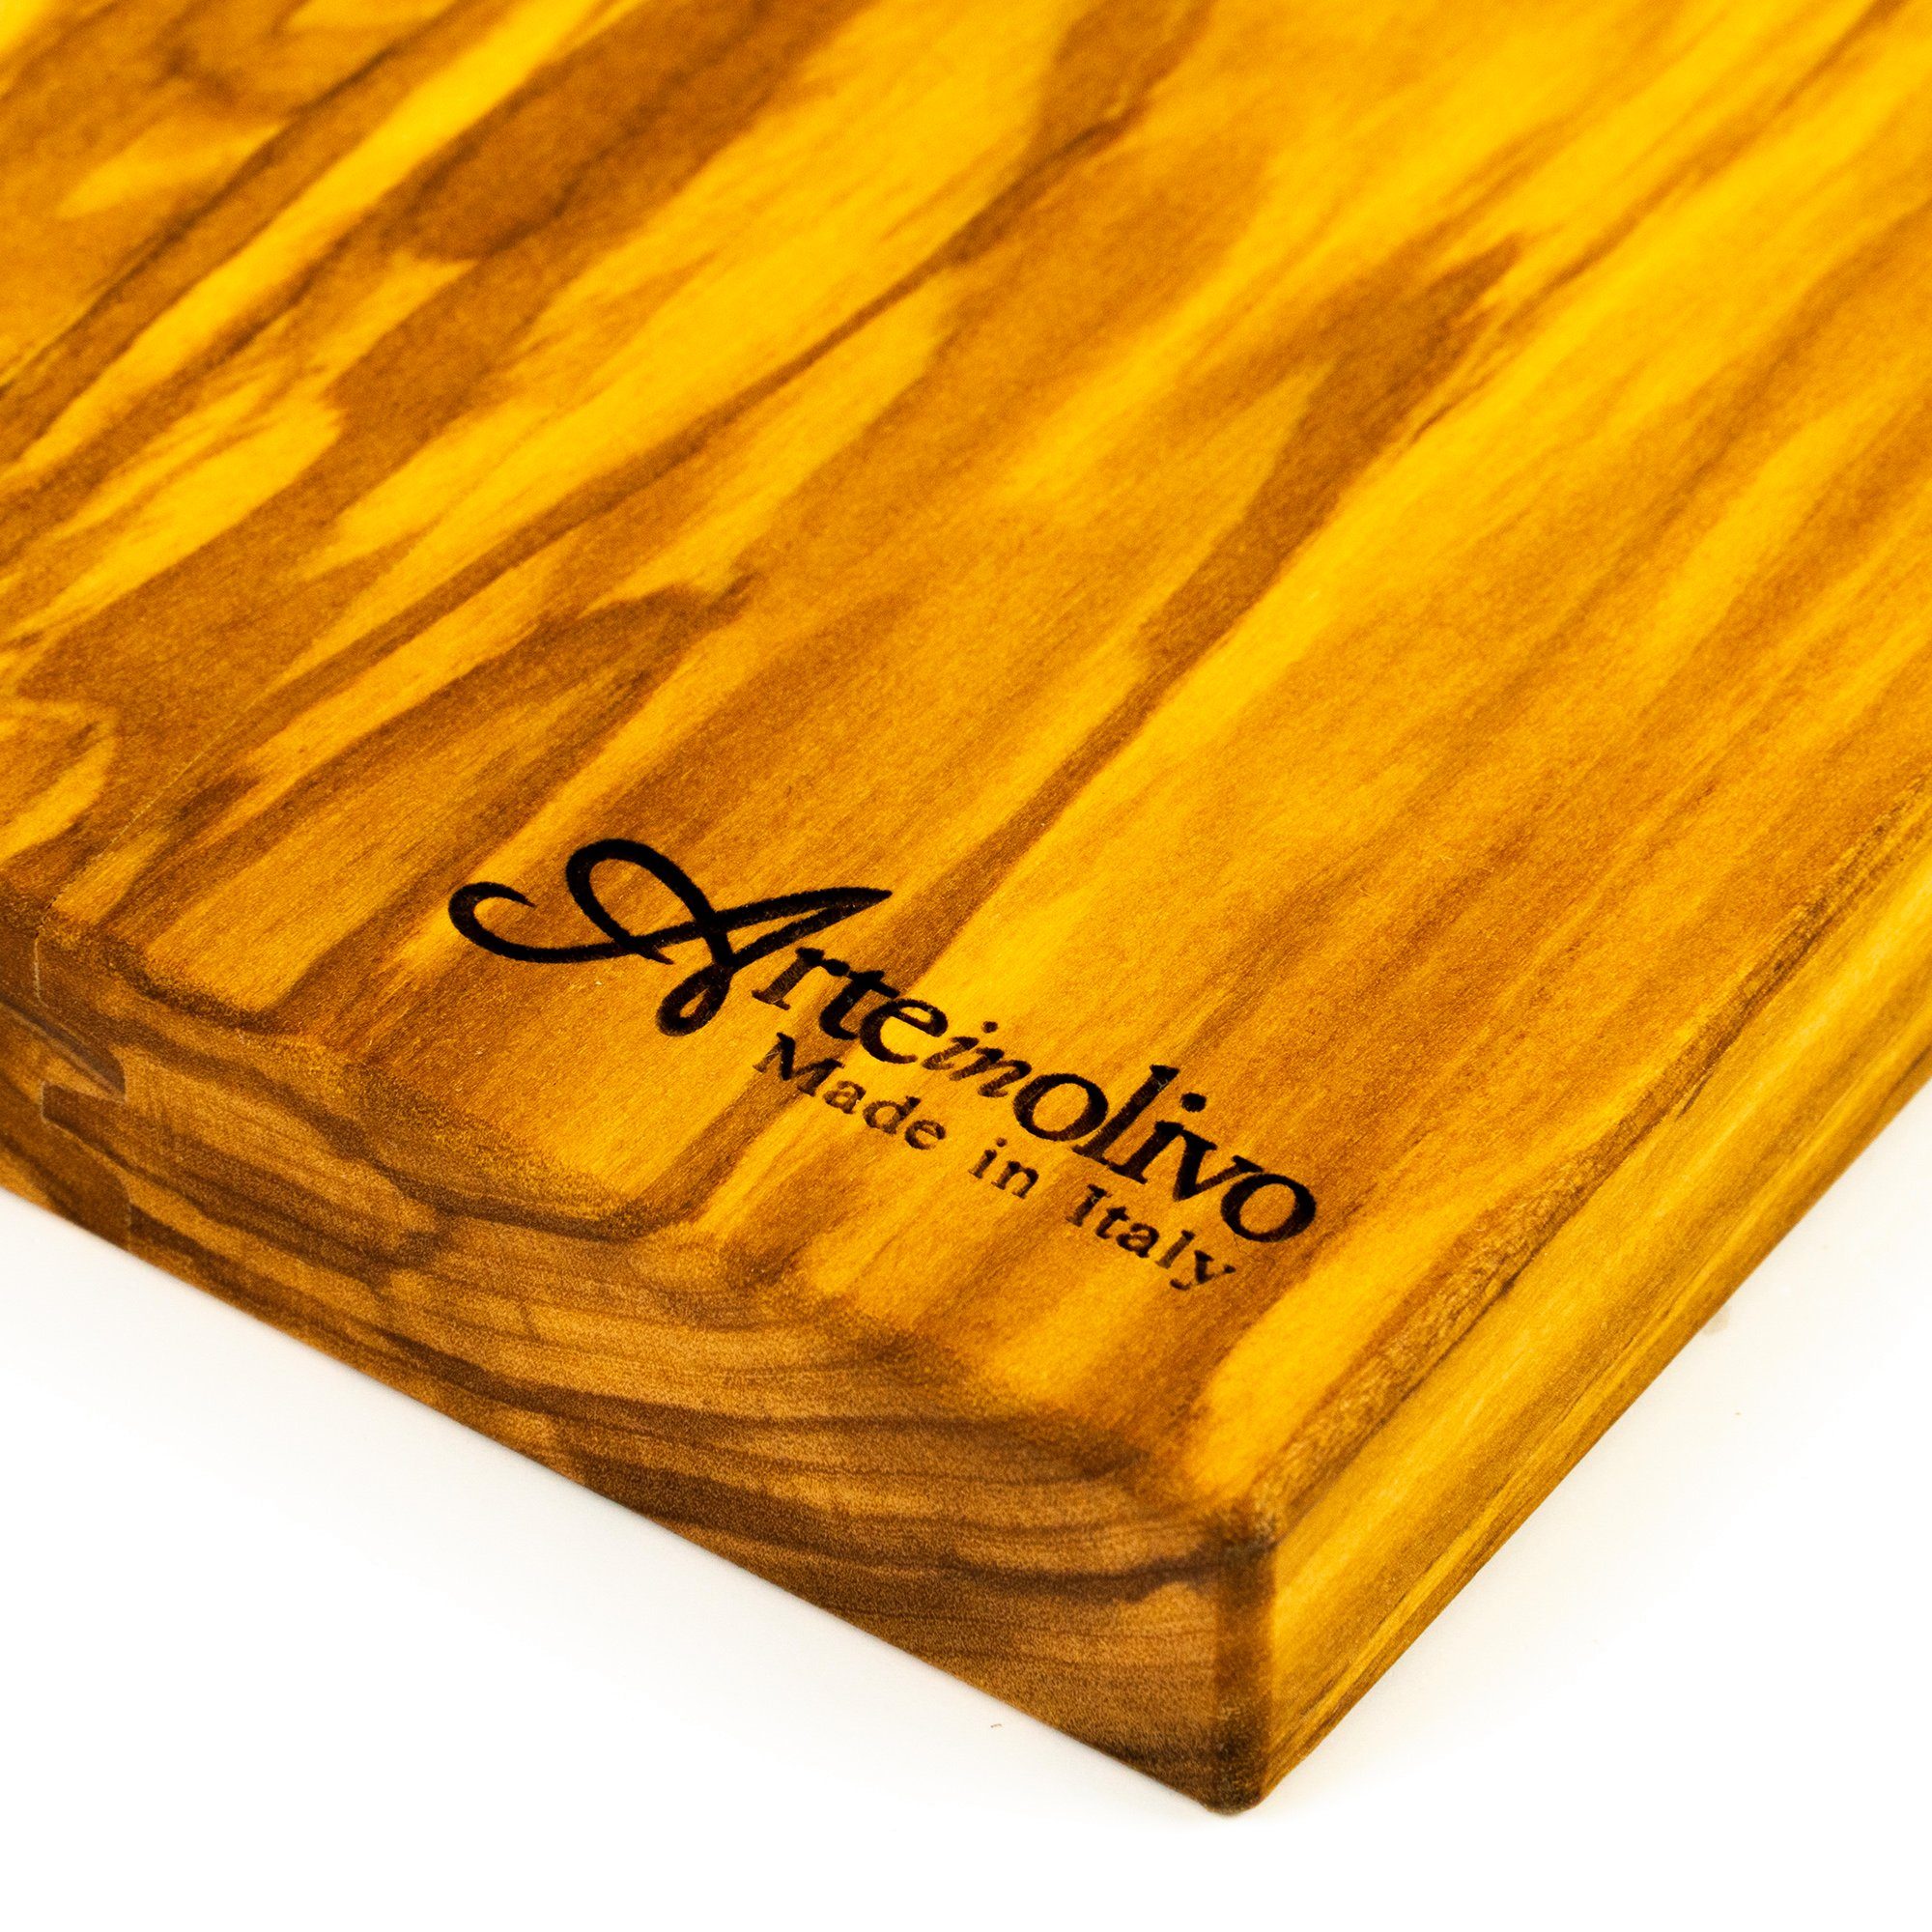 Olivenholz, Italy Holz, in Made aus Arteinolivo Servierbrett, Schneidebrett, 100% italienischem